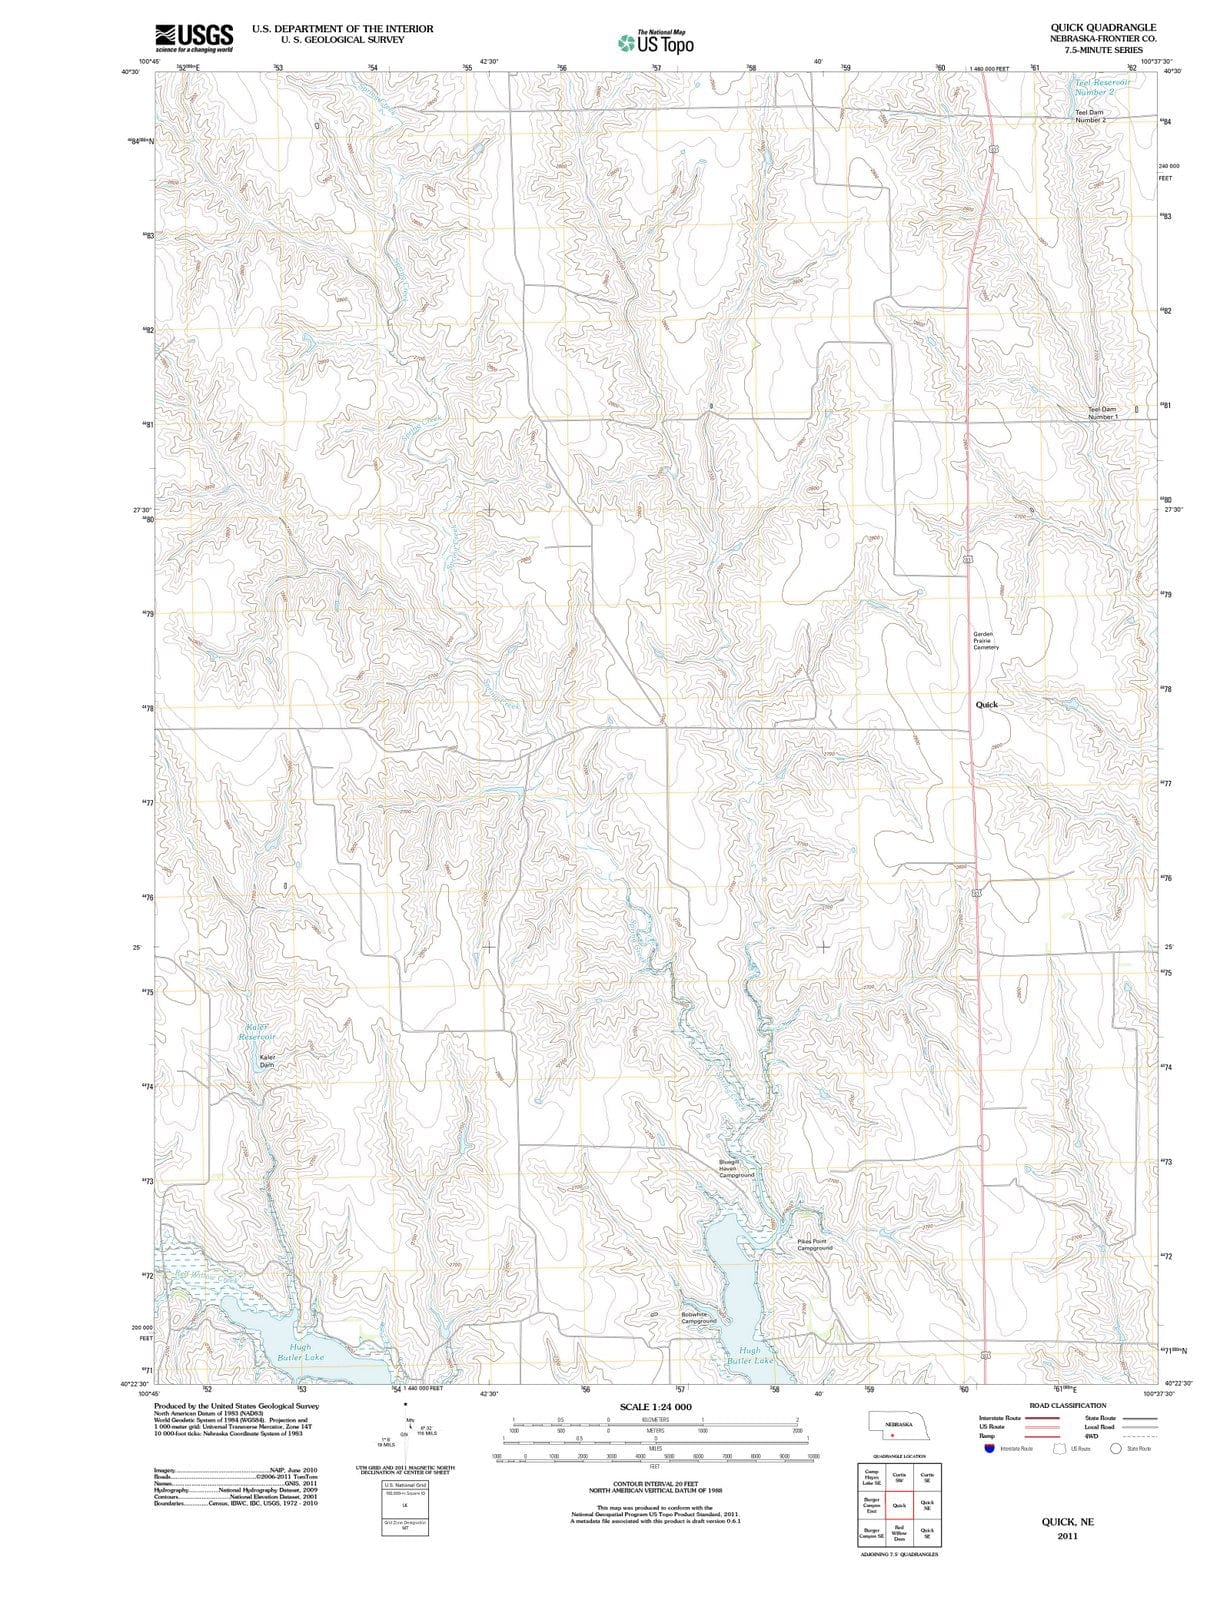 2011 Quick, NE - Nebraska - USGS Topographic Map